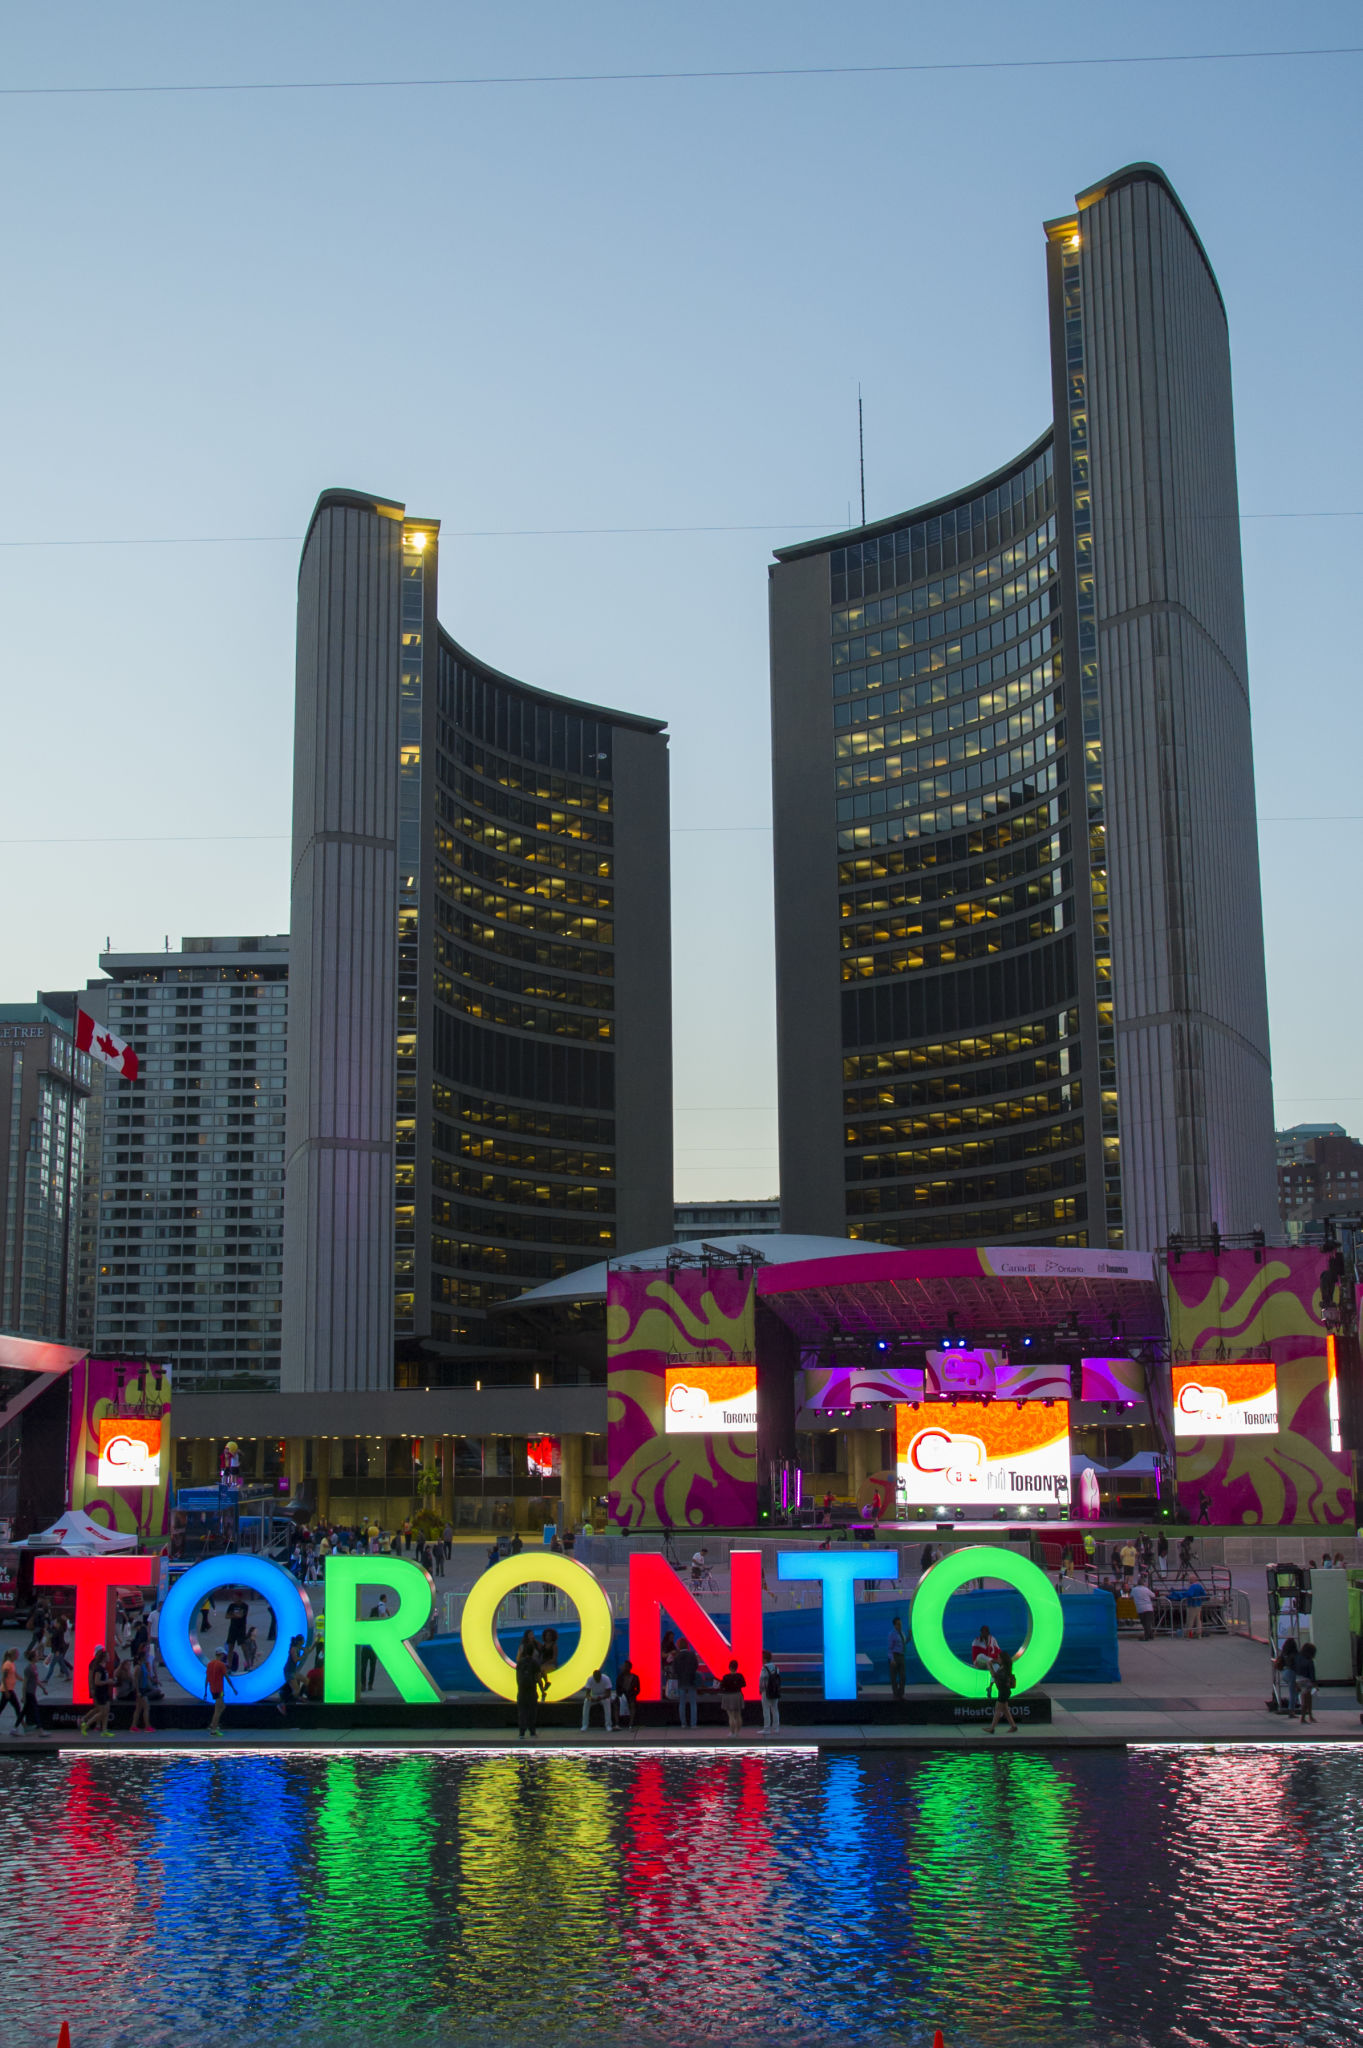 New Toronto sign proves popular at City Hall - Sign Media